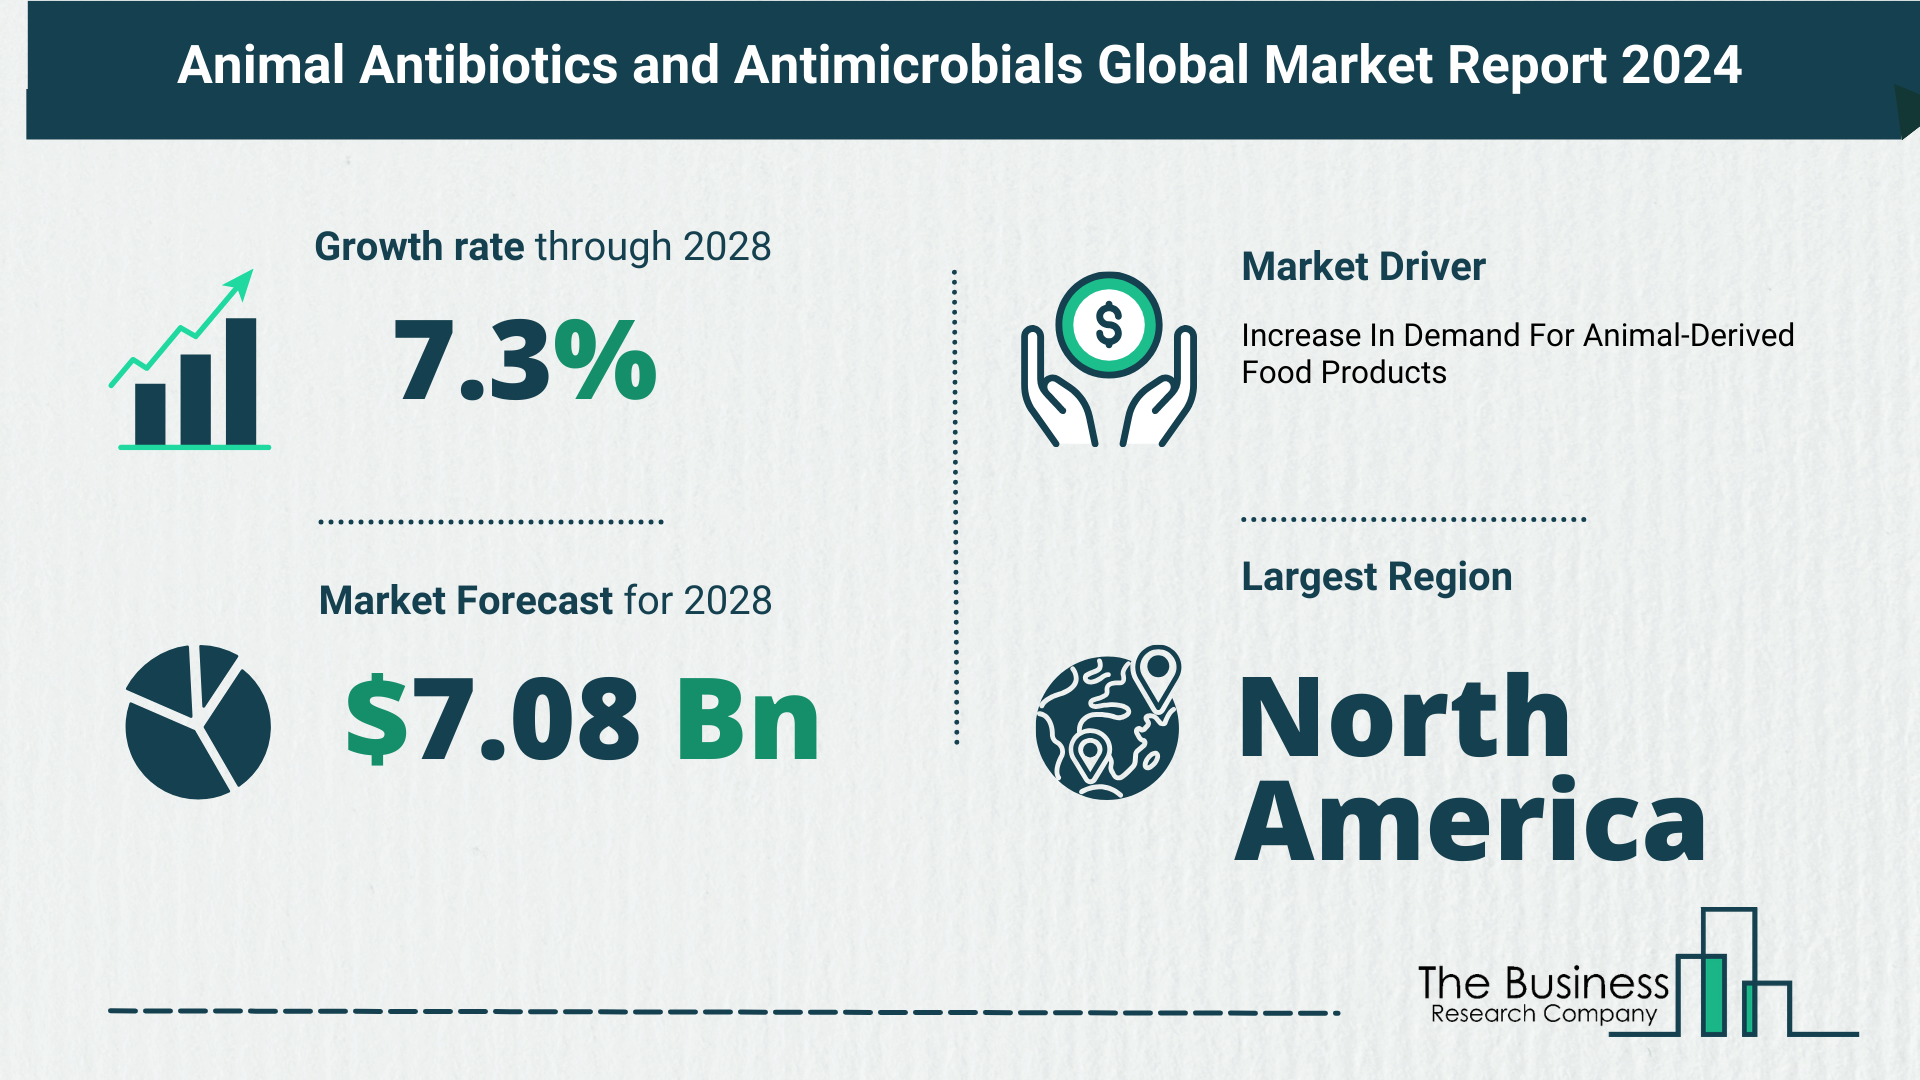 Global Animal Antibiotics and Antimicrobials Market